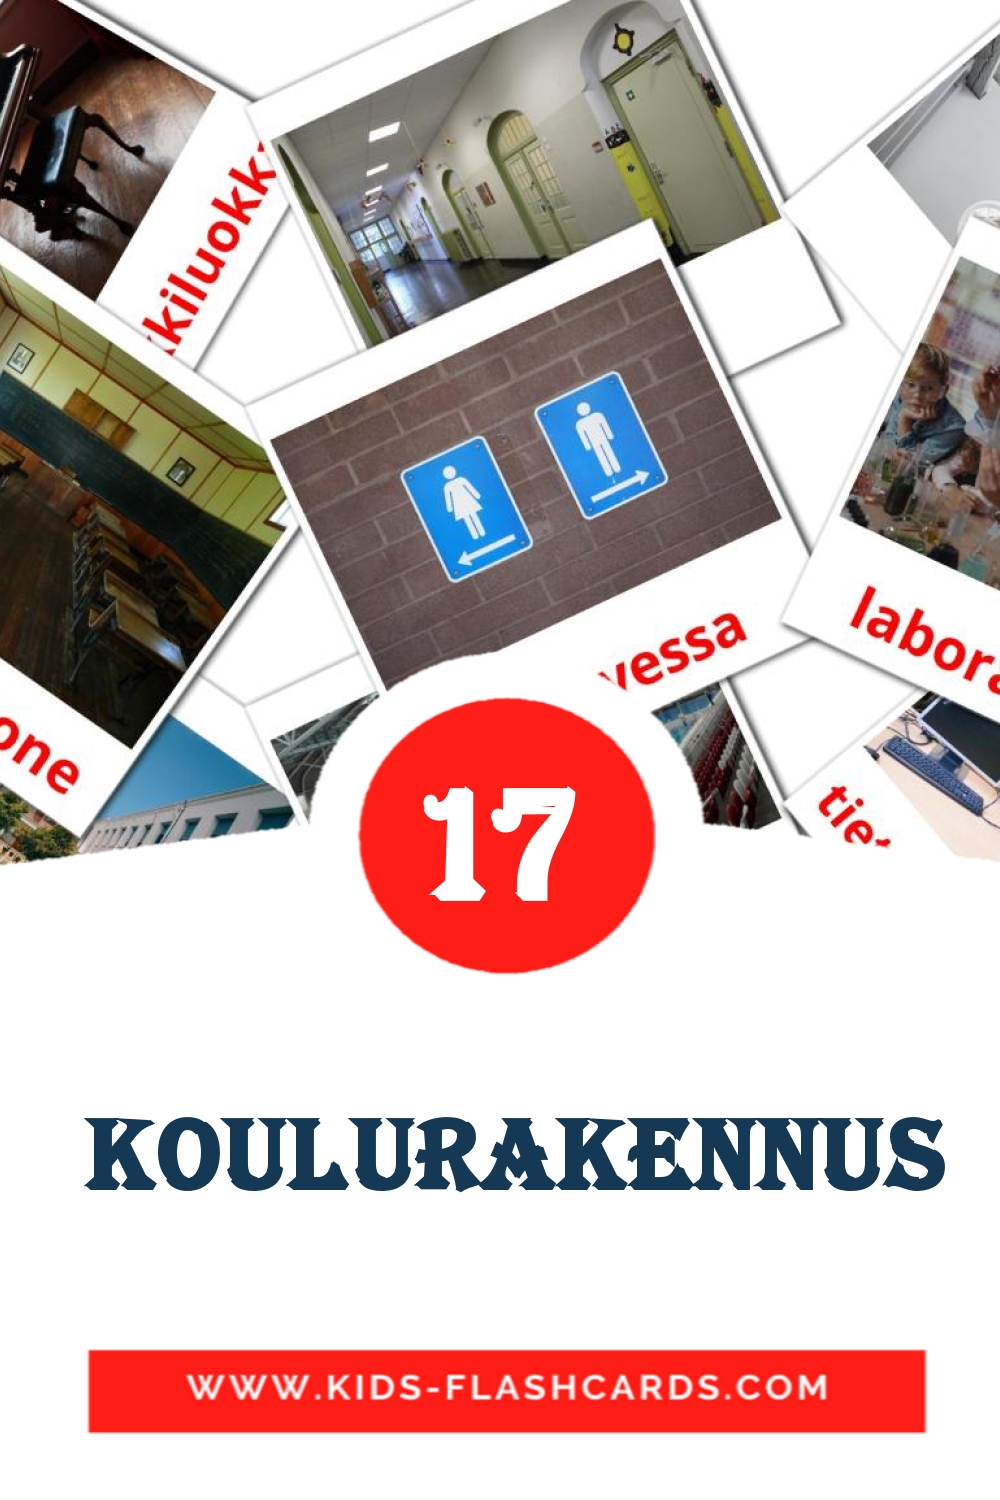  koulurakennus на финском для Детского Сада (17 карточек)